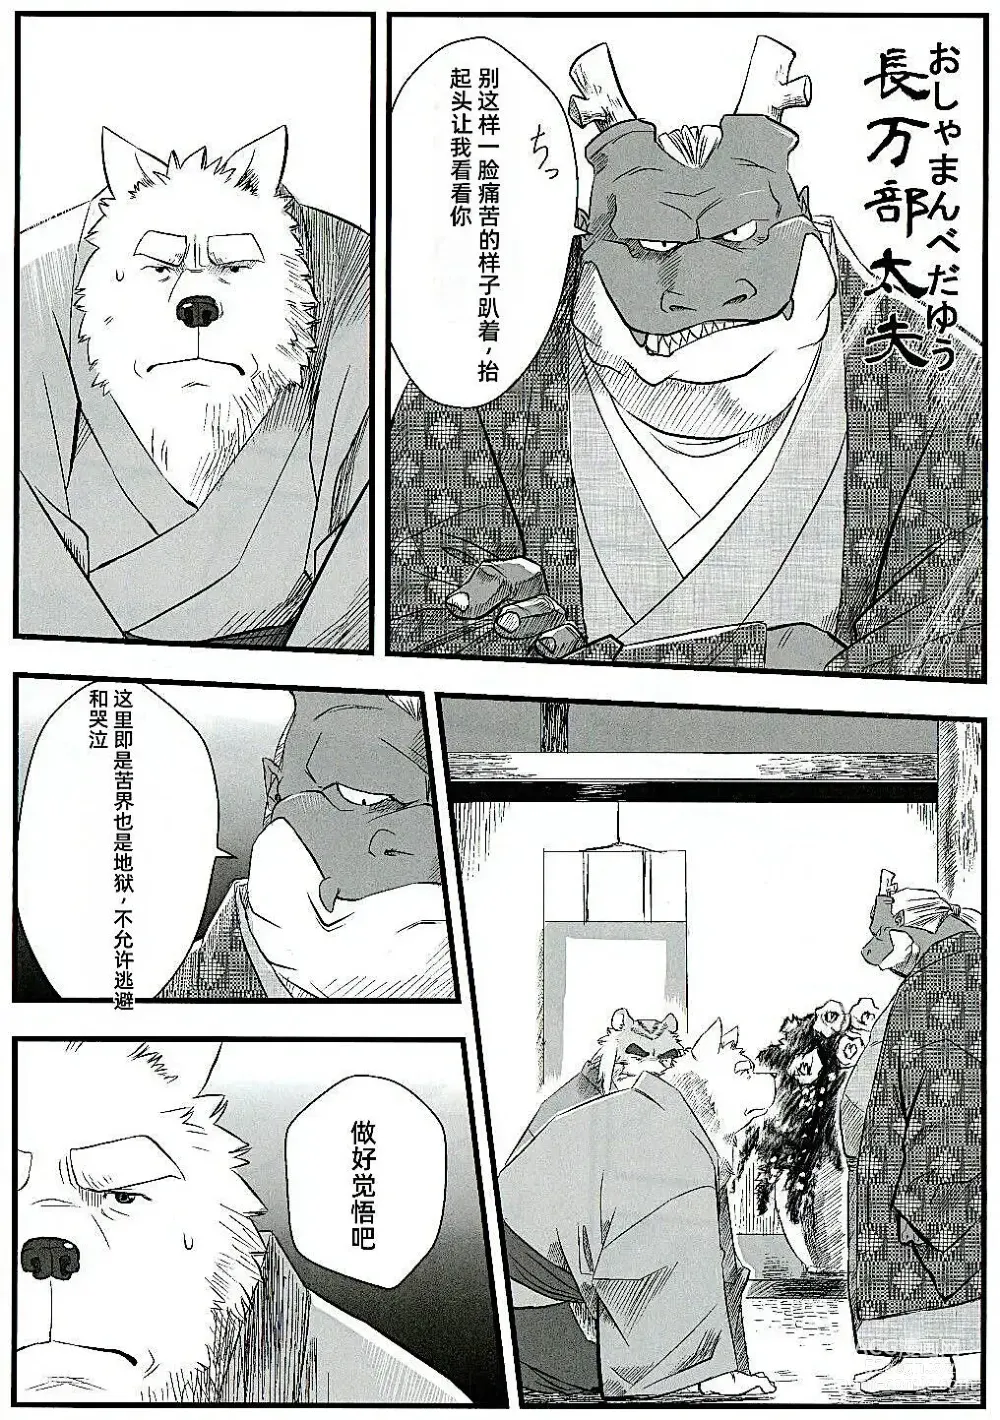 Page 6 of doujinshi 兽之楼郭 月华缭乱 月阴之章